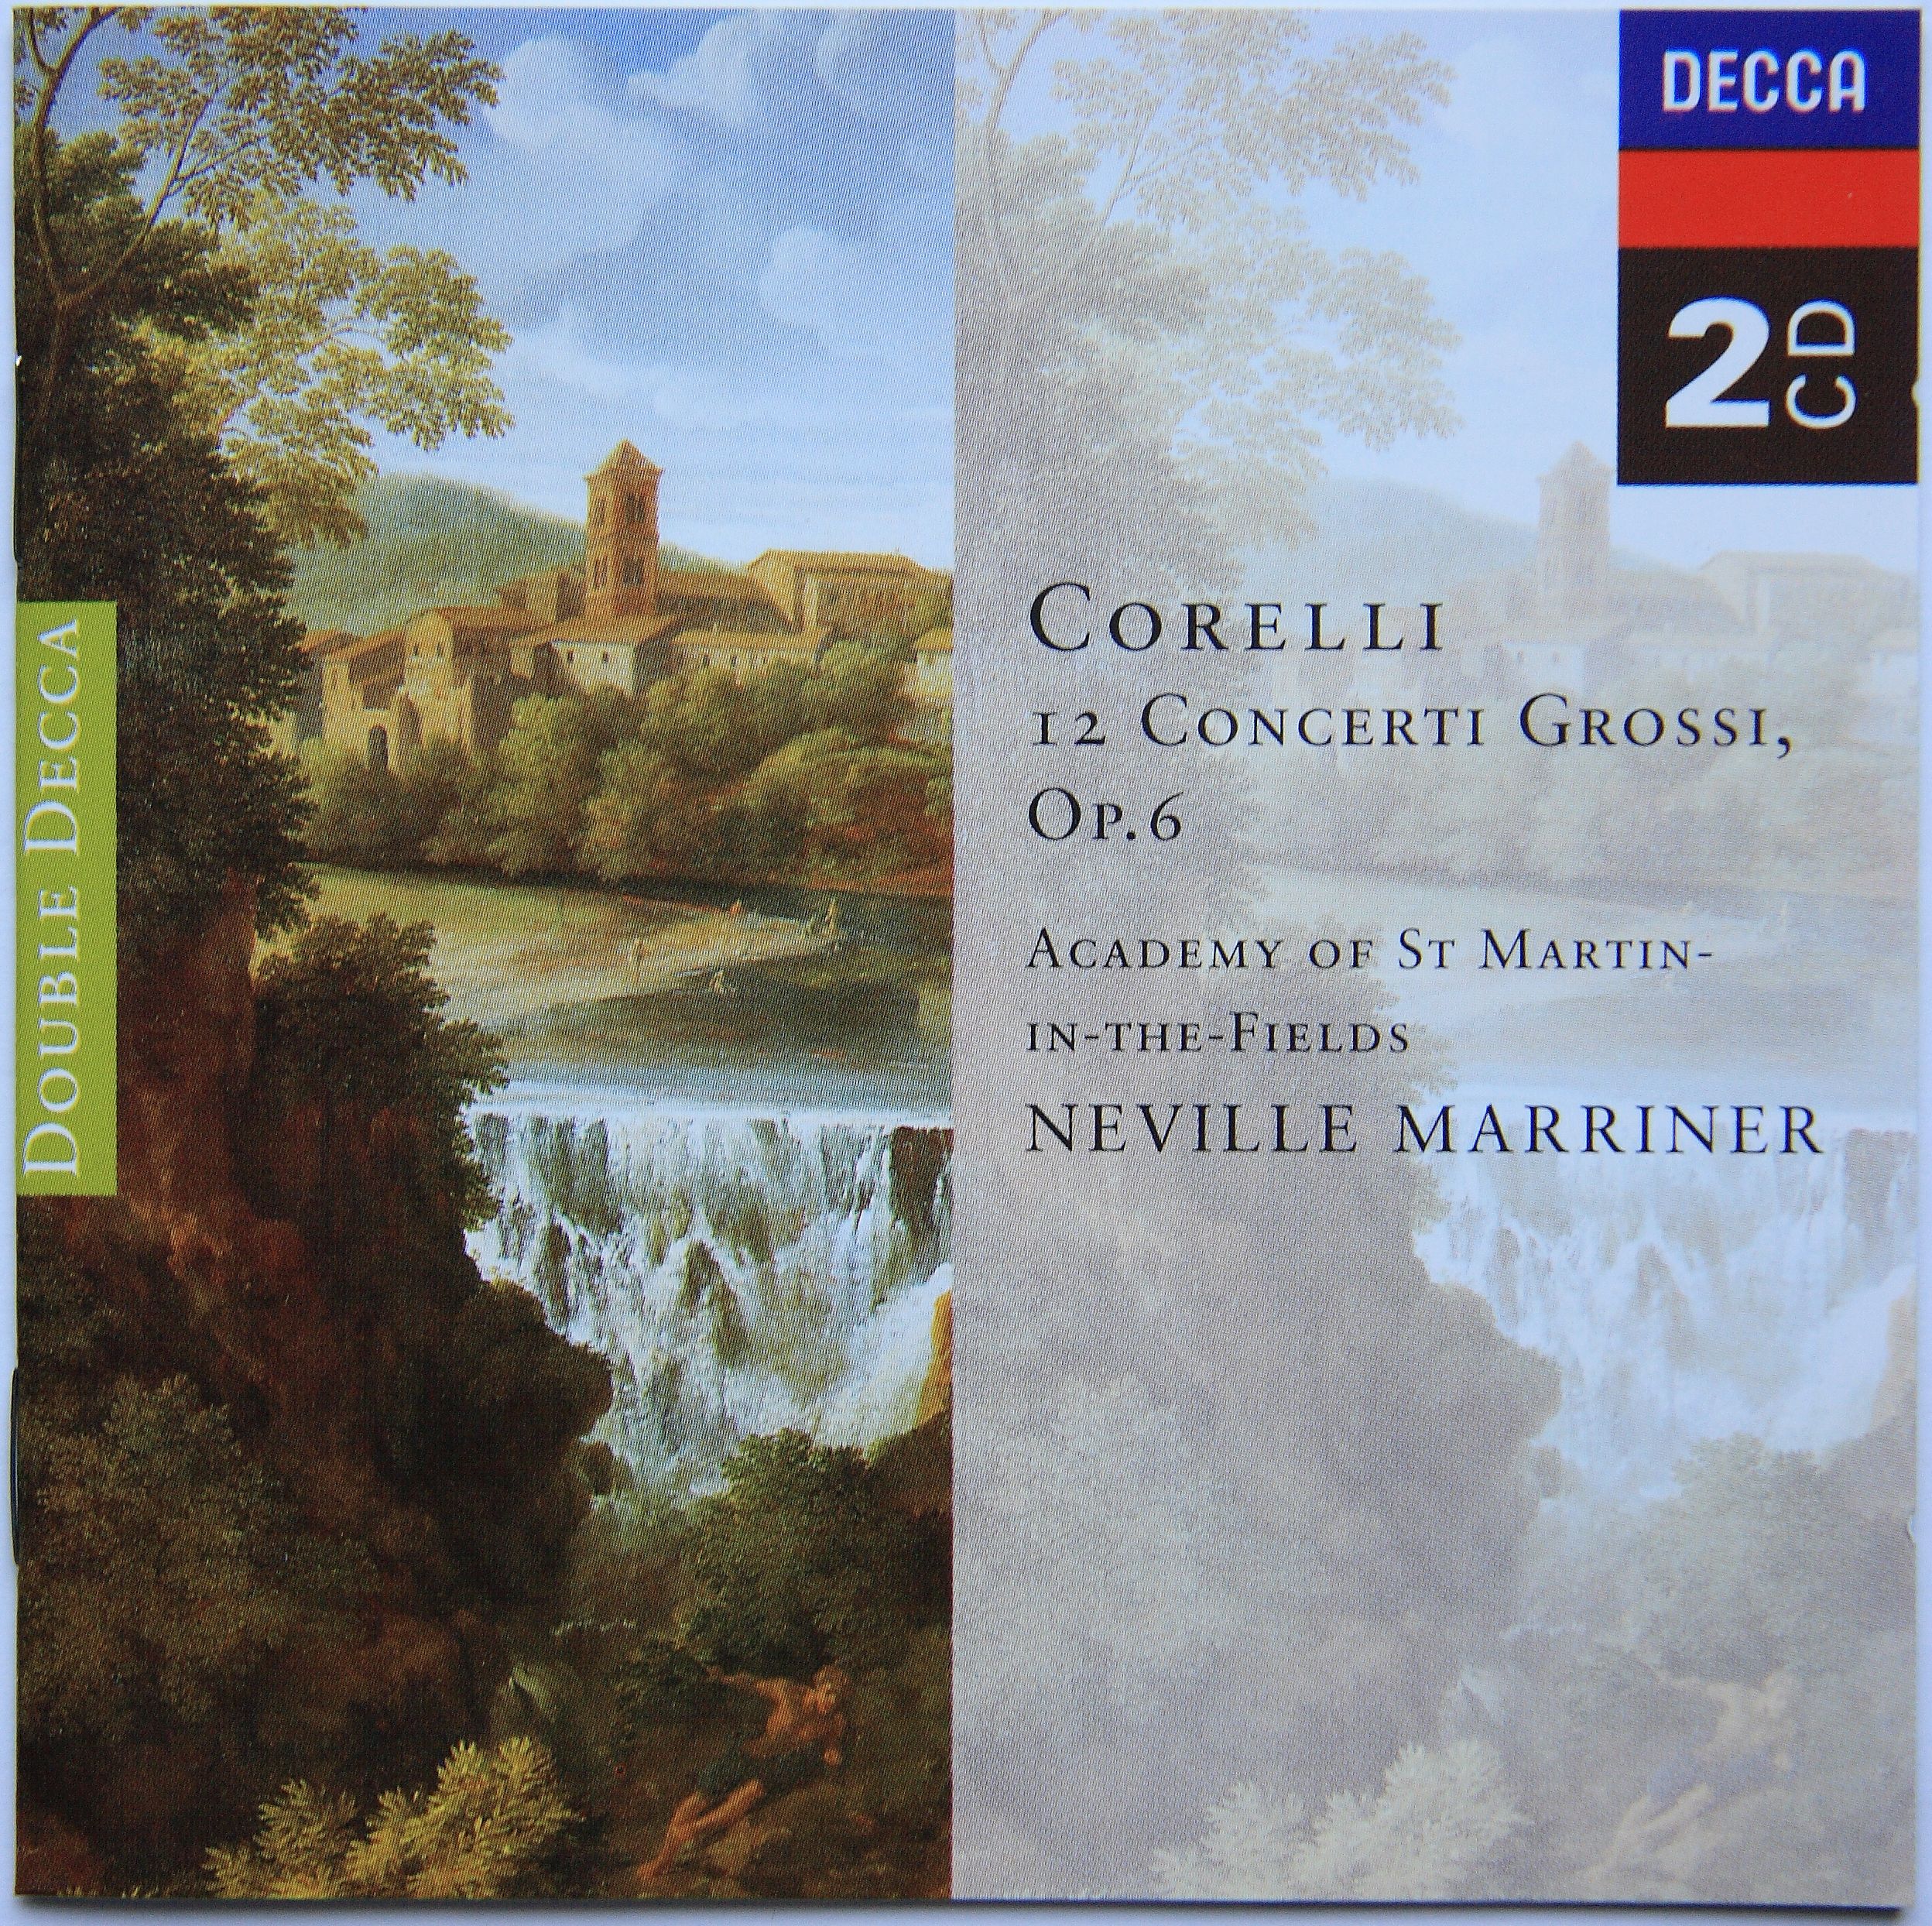 Neville Marriner - Corelli - 12 Concerto grossi opus 6 APE 2cd